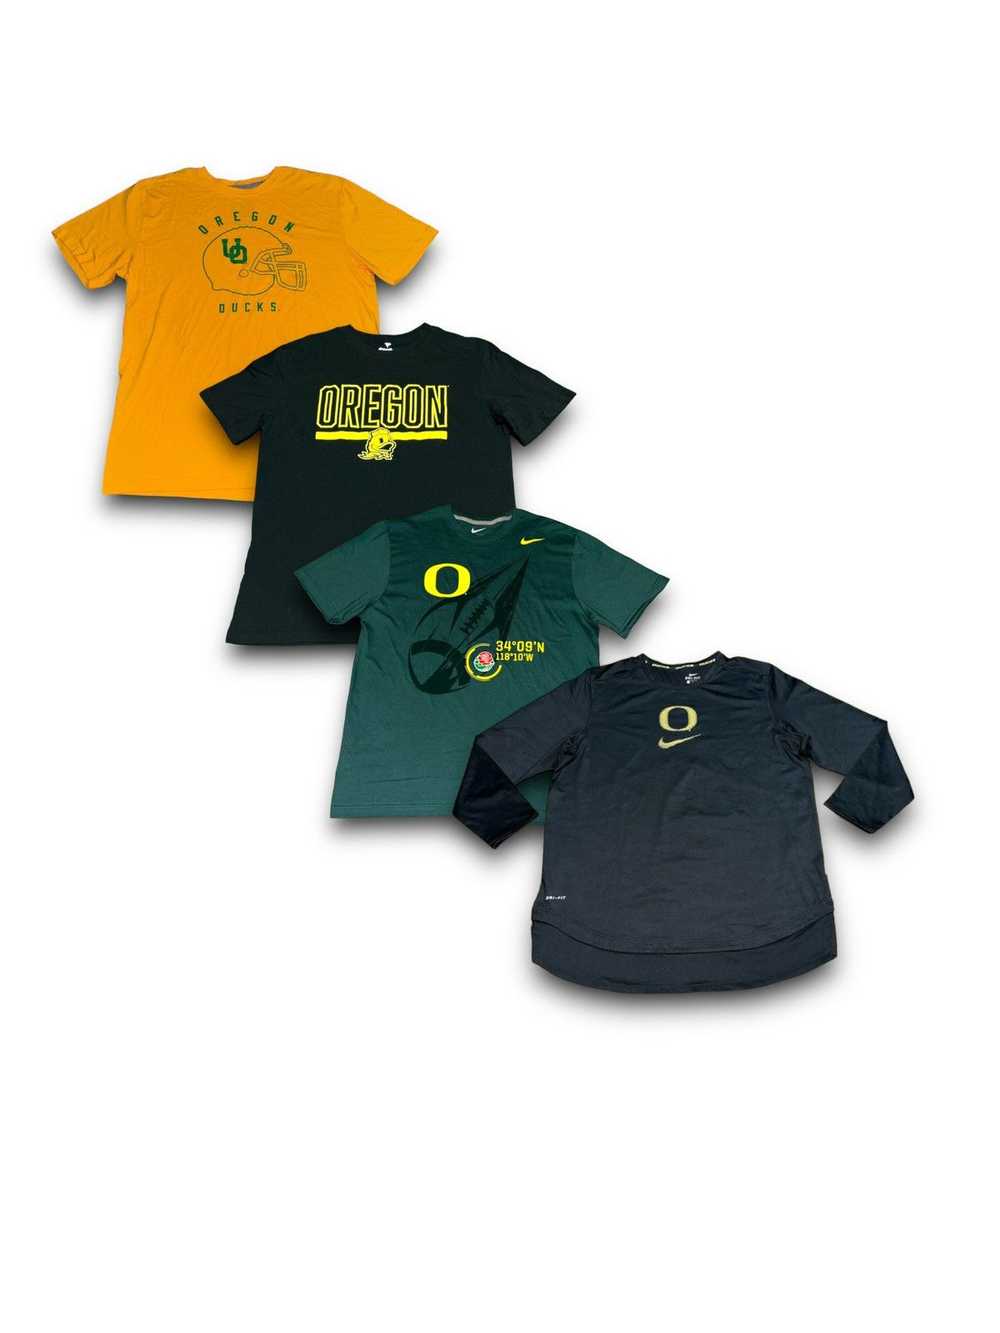 Ncaa × Nike Oregon ducks Nike shirt bundle - image 2